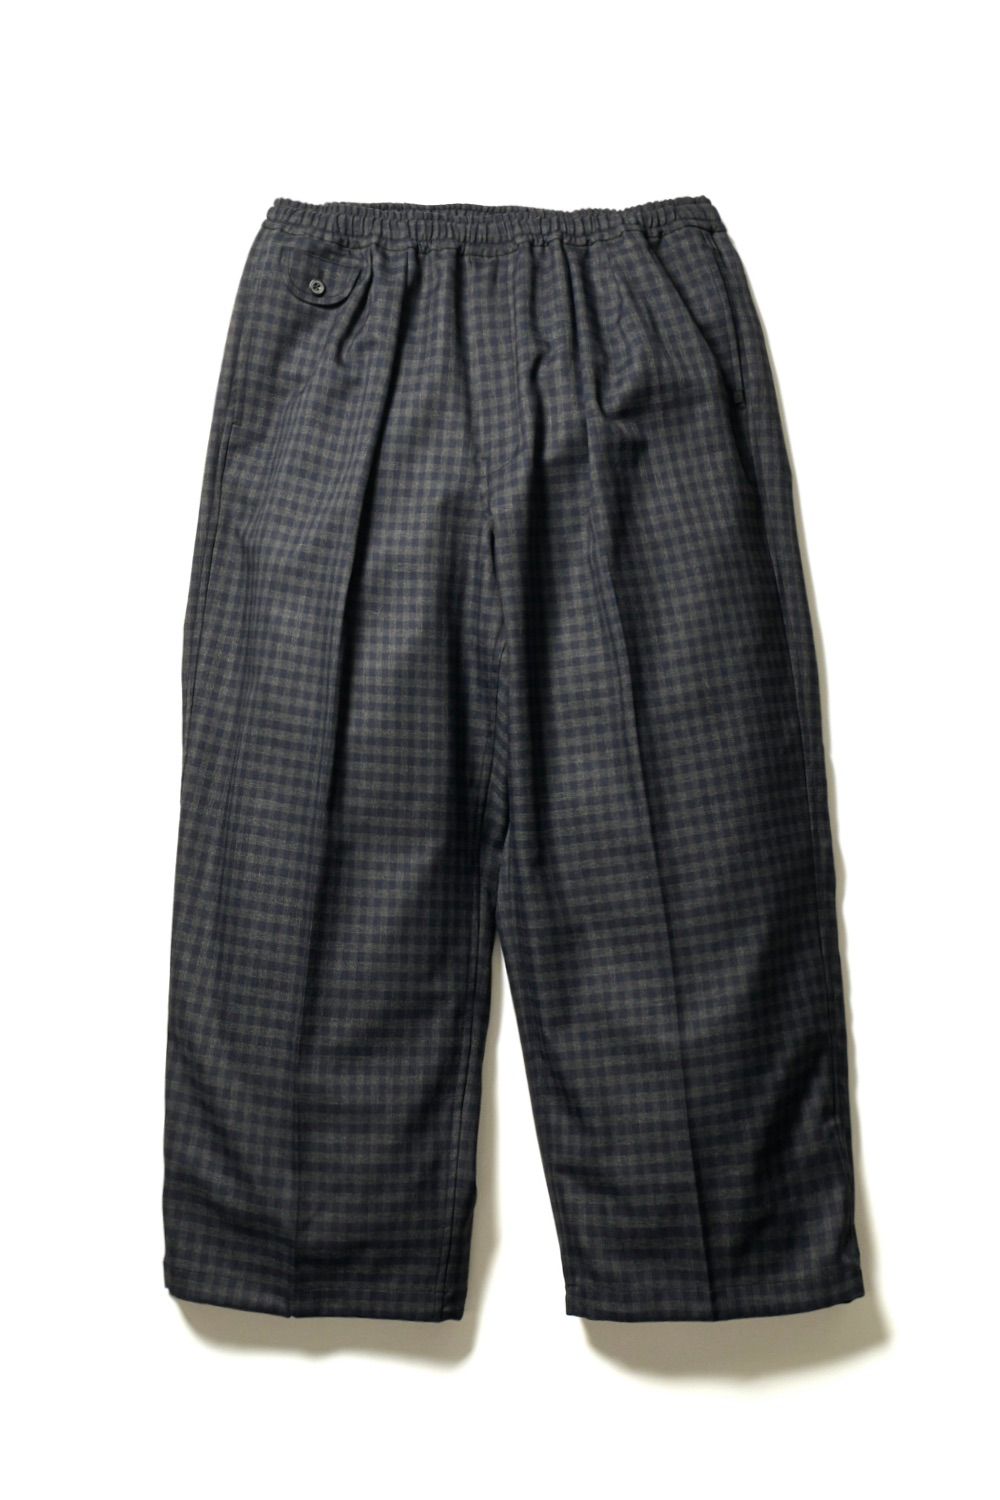 DAIWA PIER39 - tech wide easy 2p trousers plaids -navy gingham